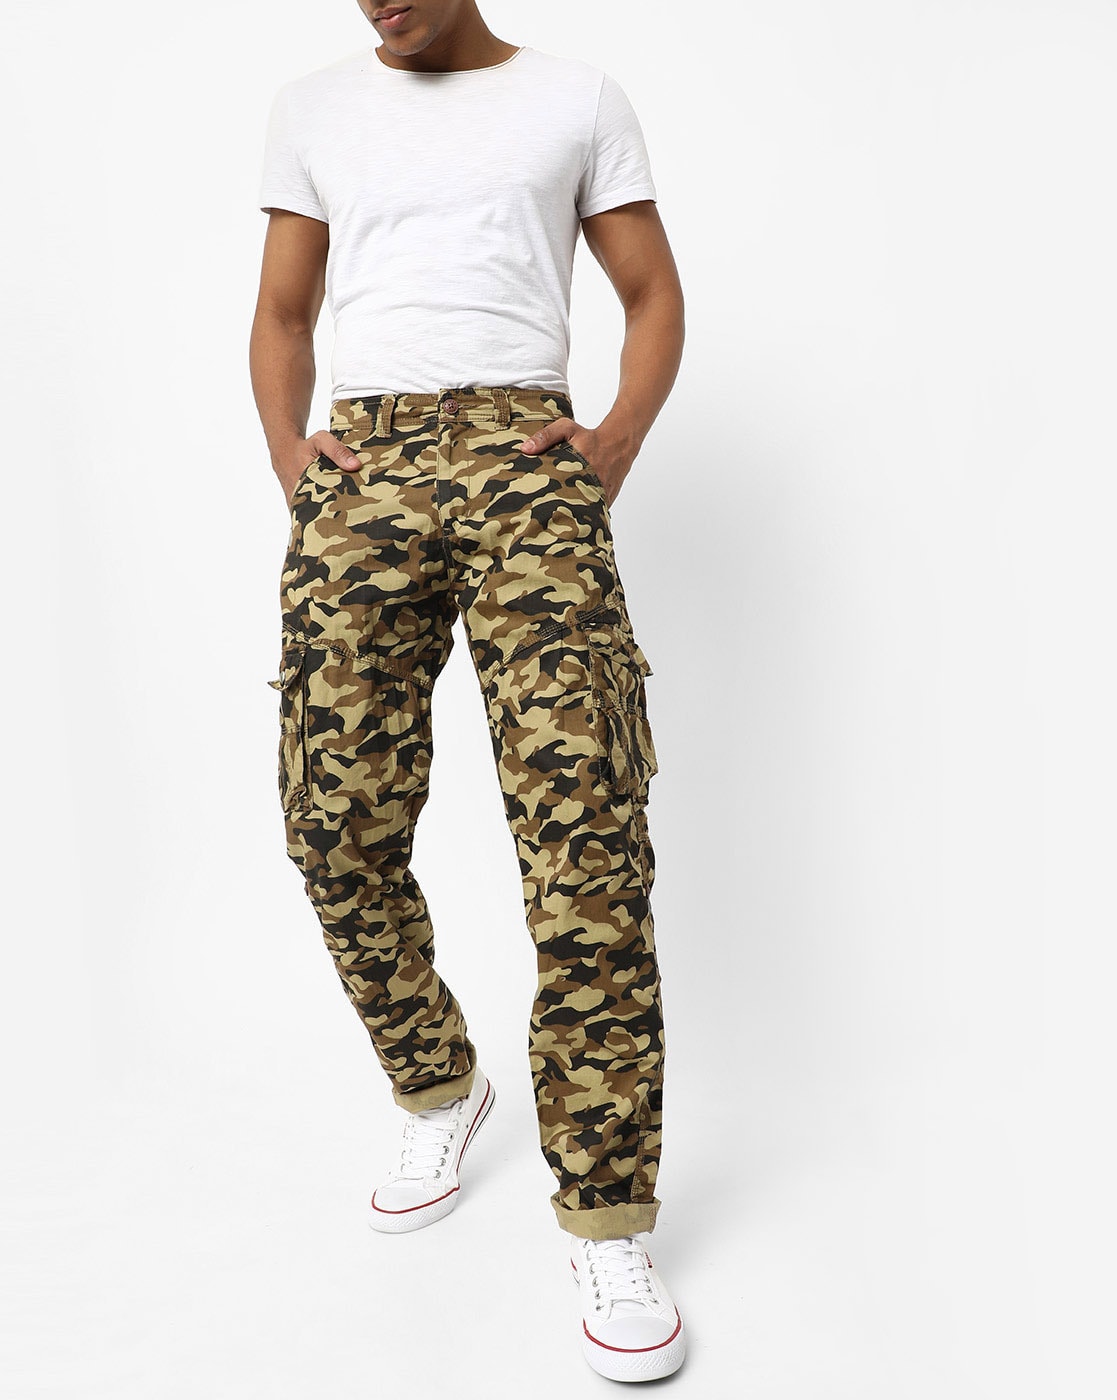 Buy Greendigo Kids Green Camouflage Trousers for Boys Clothing Online   Tata CLiQ